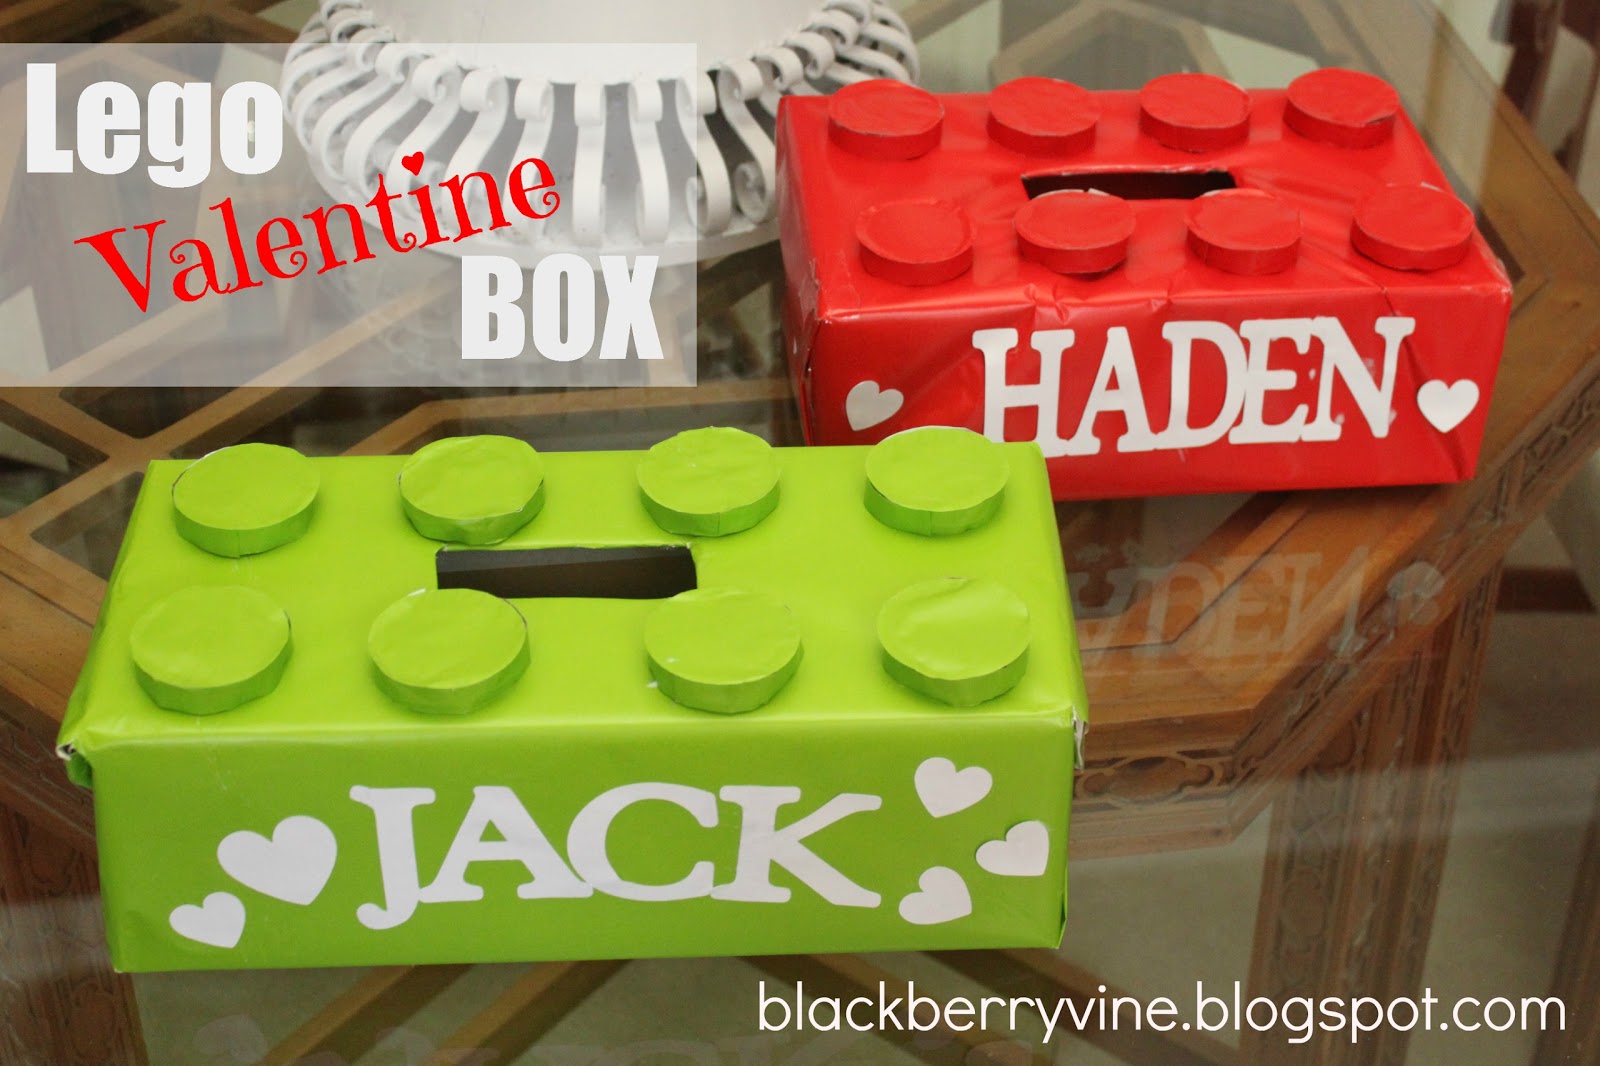 The Blackberry Vine: Lego Valentine Box